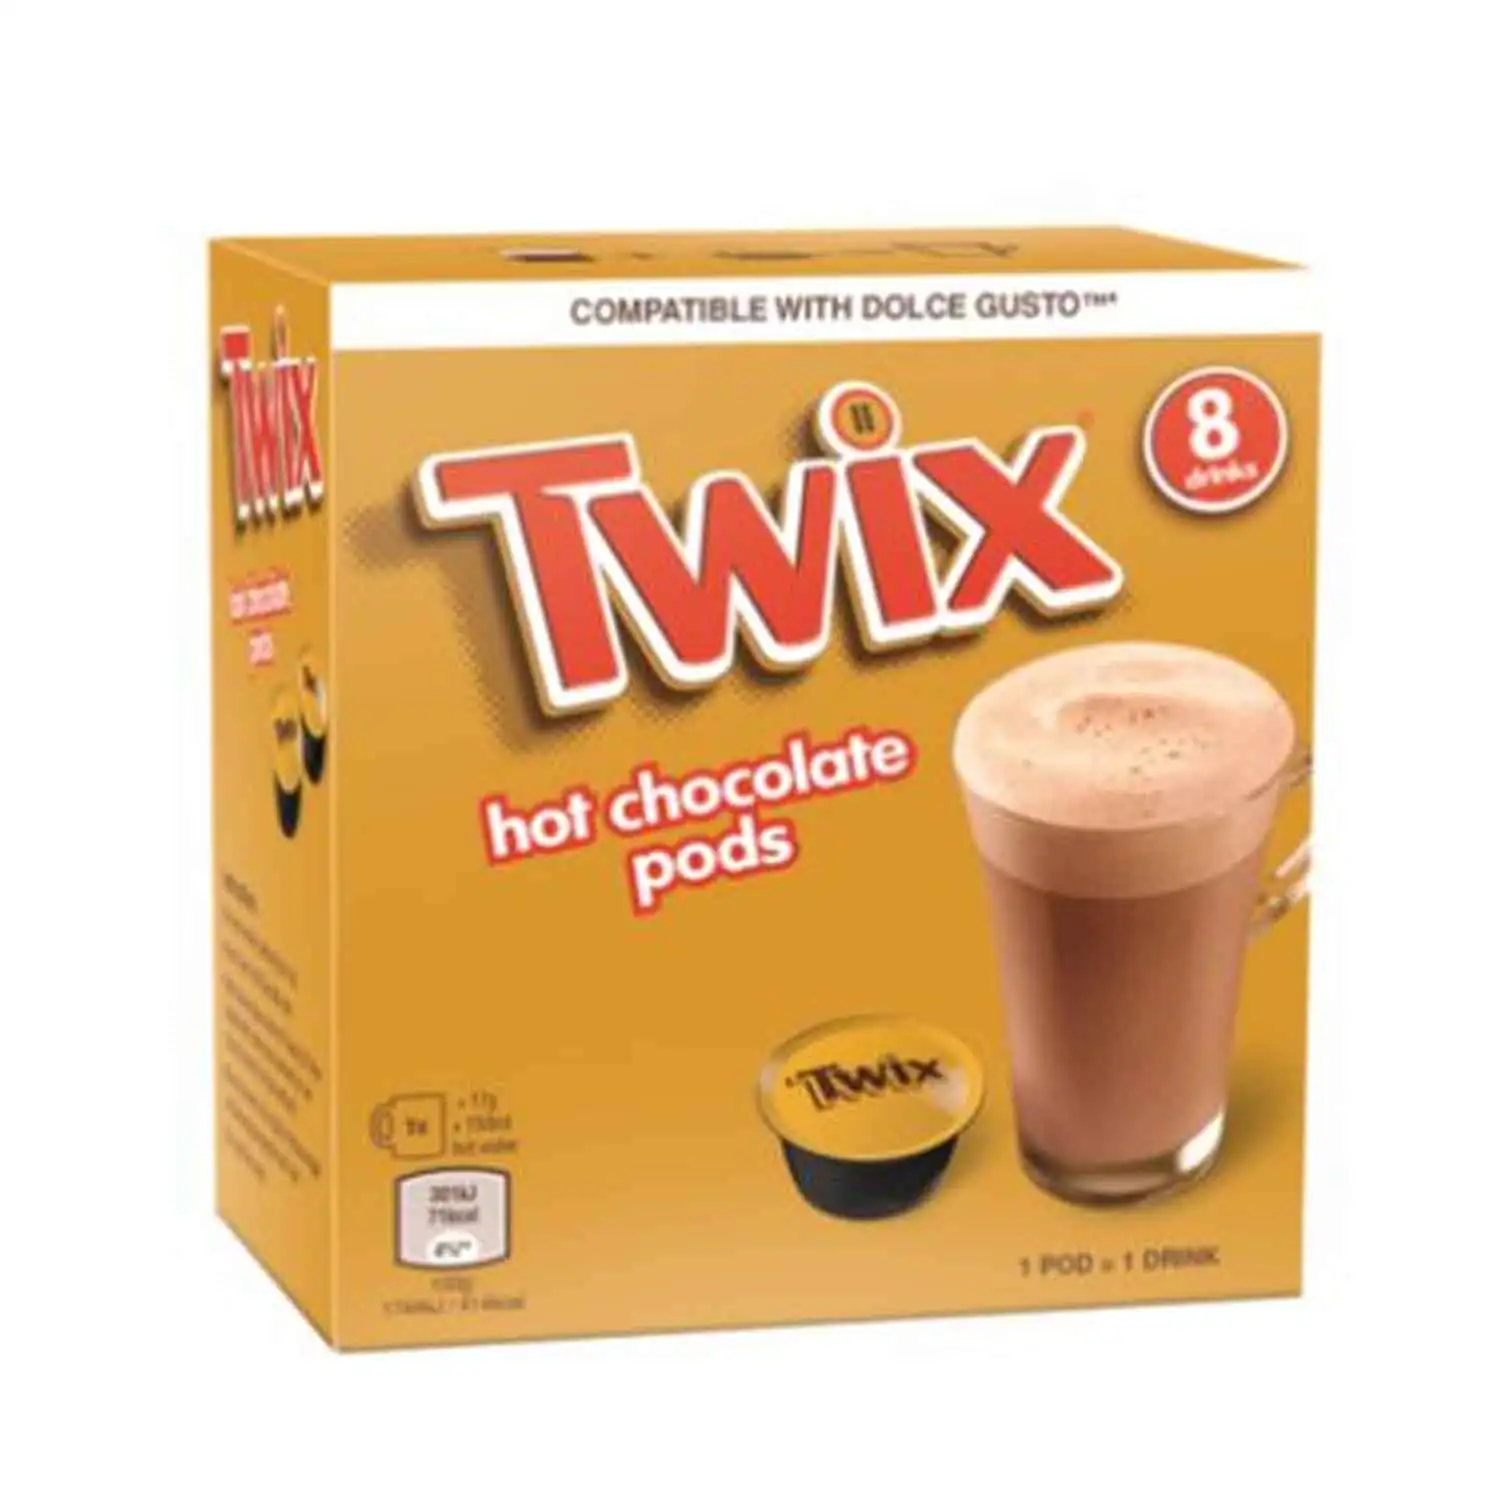 Twix chocolat chaud pods 8x15g - Buy at Real Tobacco